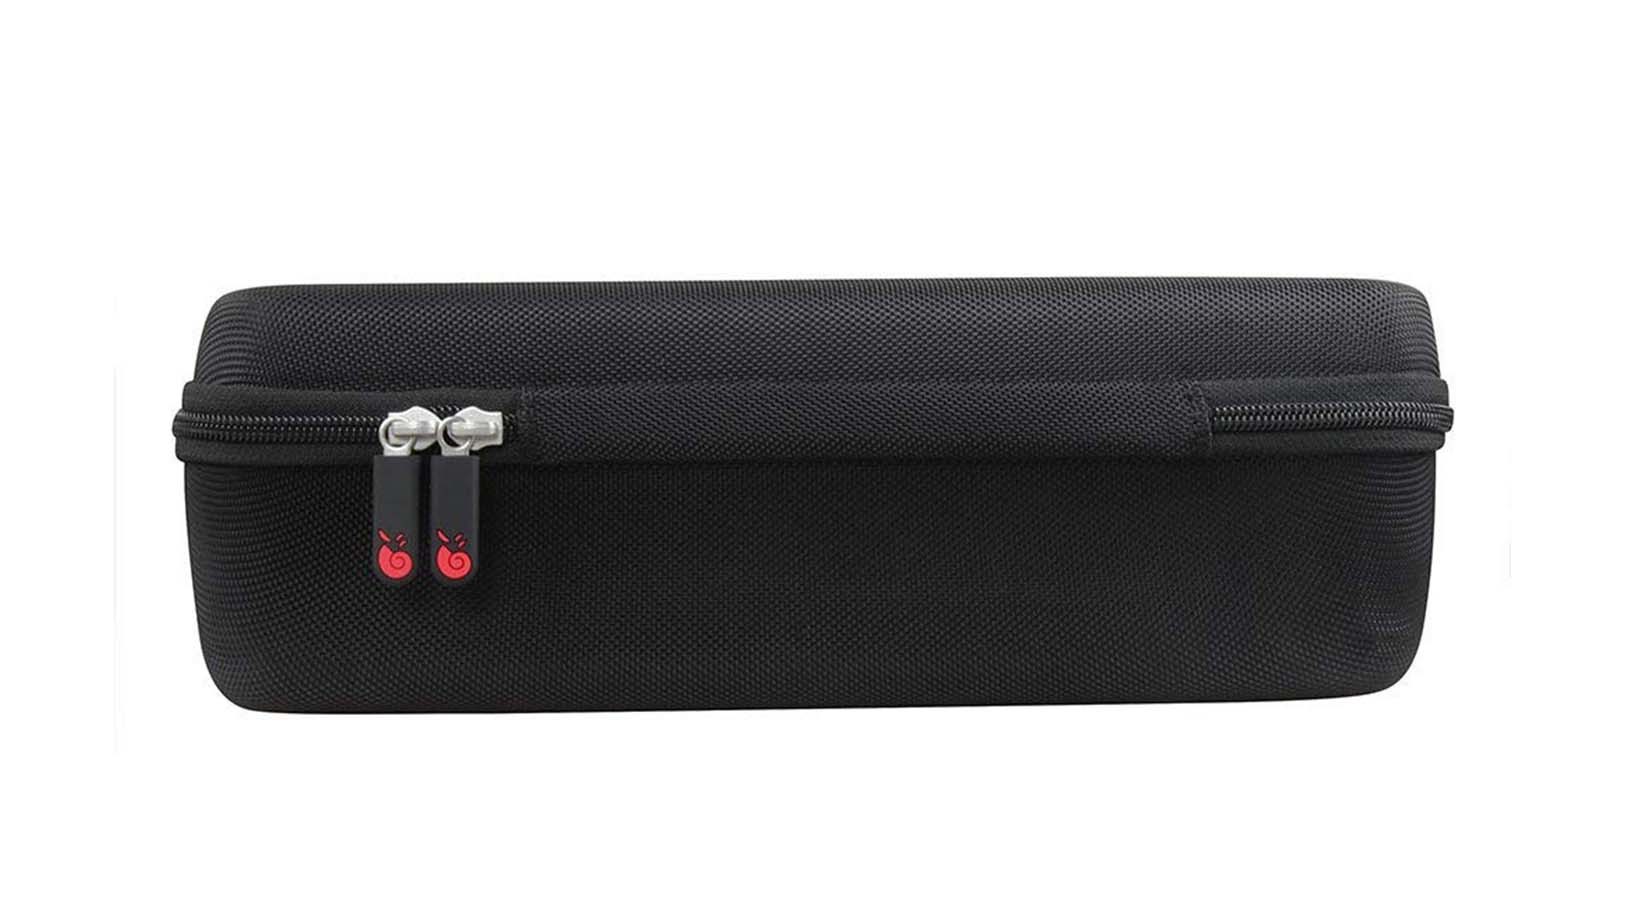 protective eva protective case pencil box for hard drive